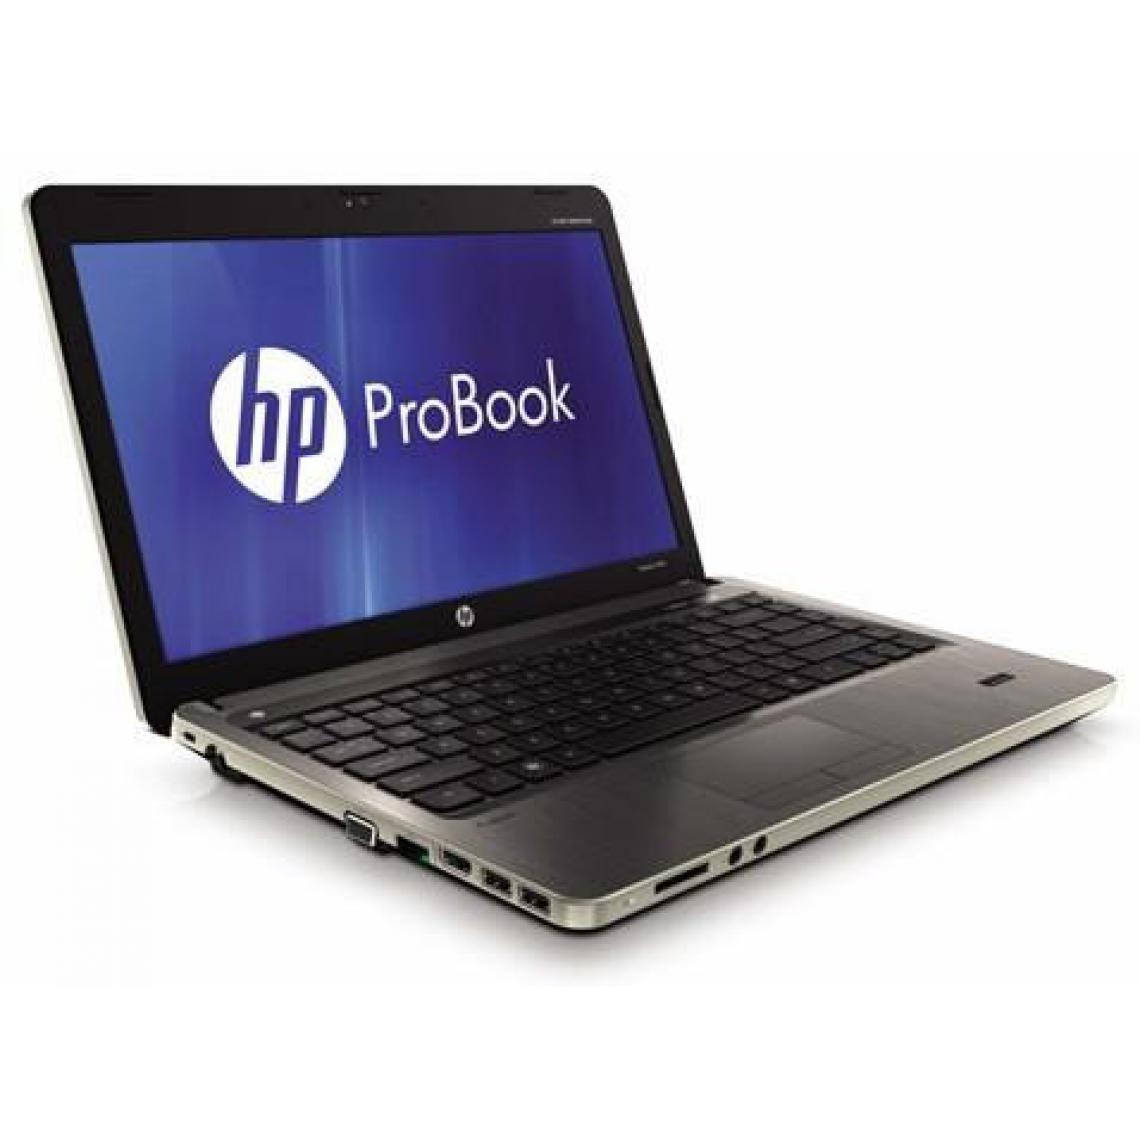 Hp - HP 6460B (6460B4128i5) - PC Portable